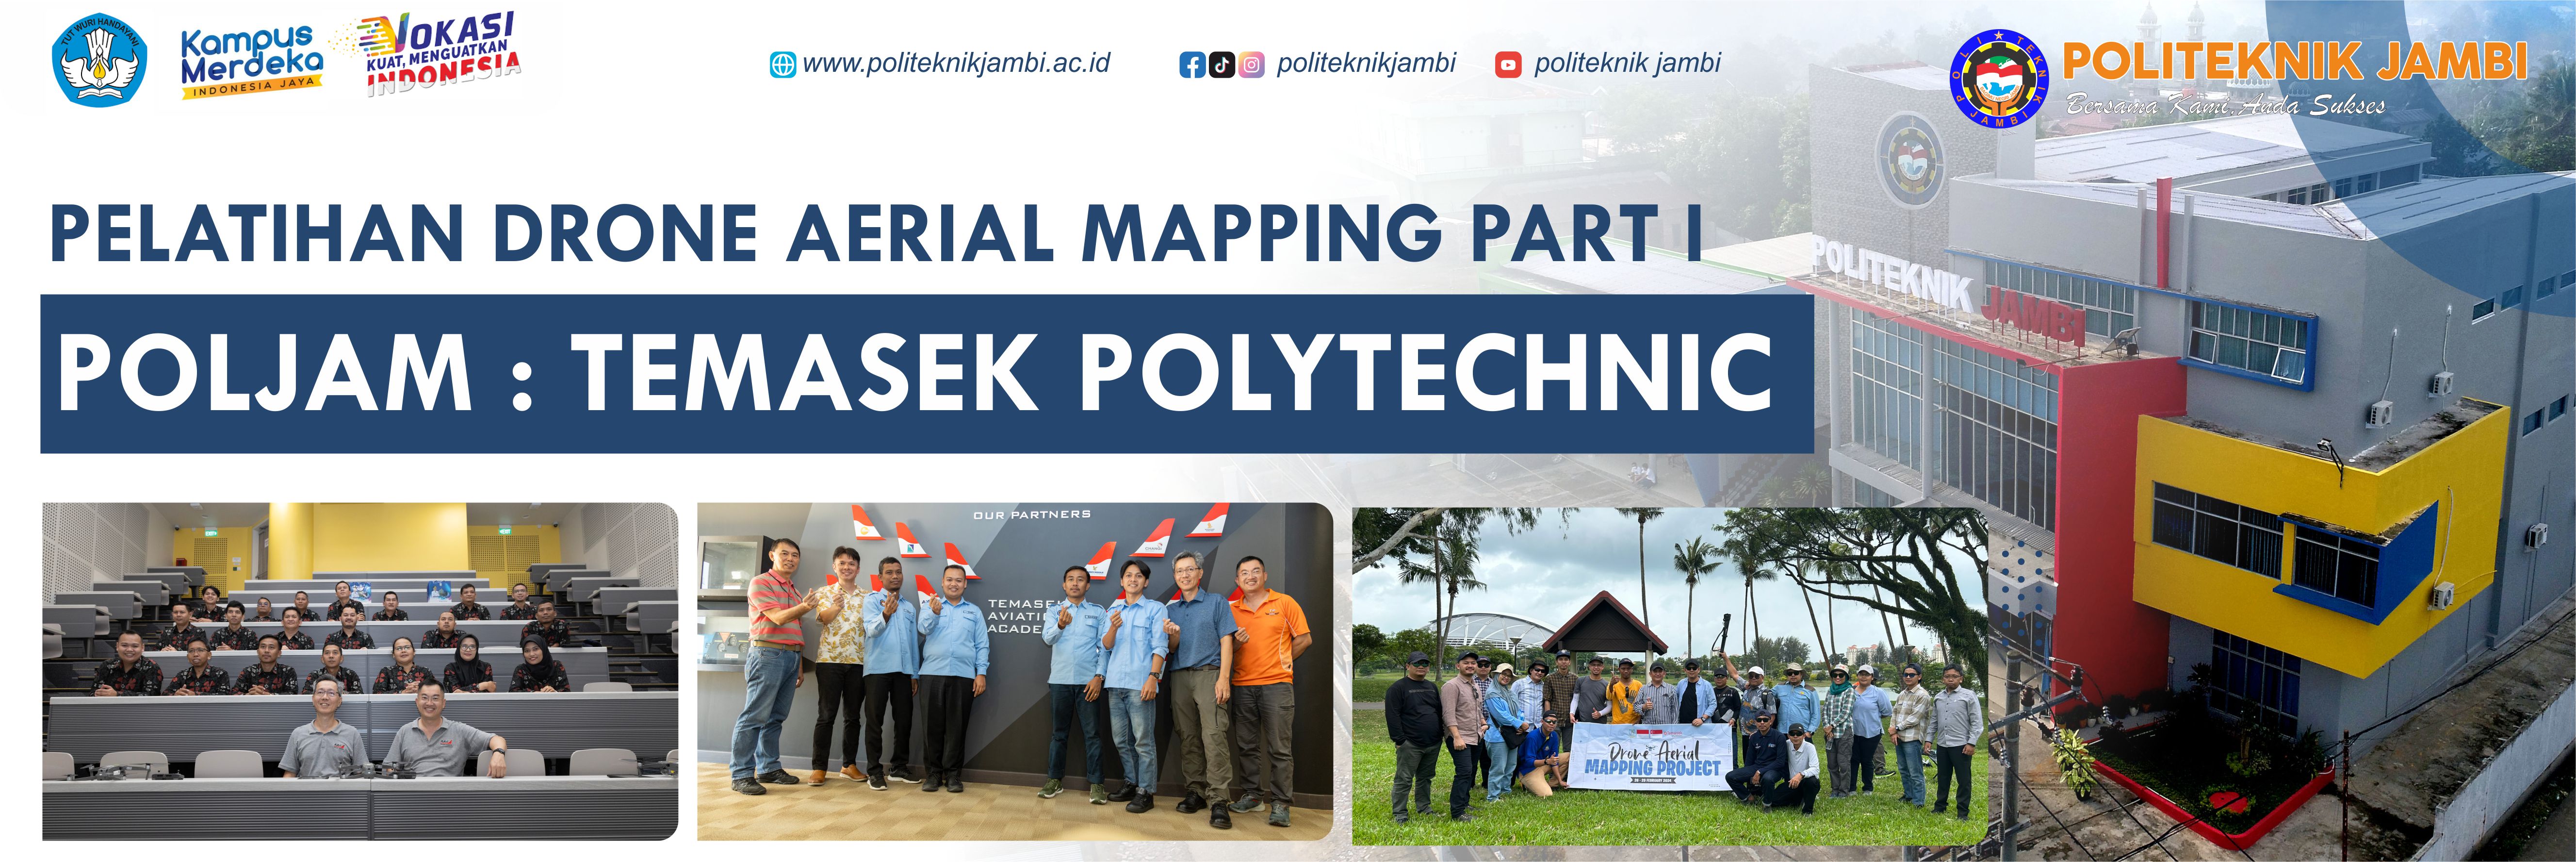 Dosen dan Karyawan Poljam Mengikuti Pelatihan Drone Aerial Mapping Project di Temasek Polytechnic Singapore